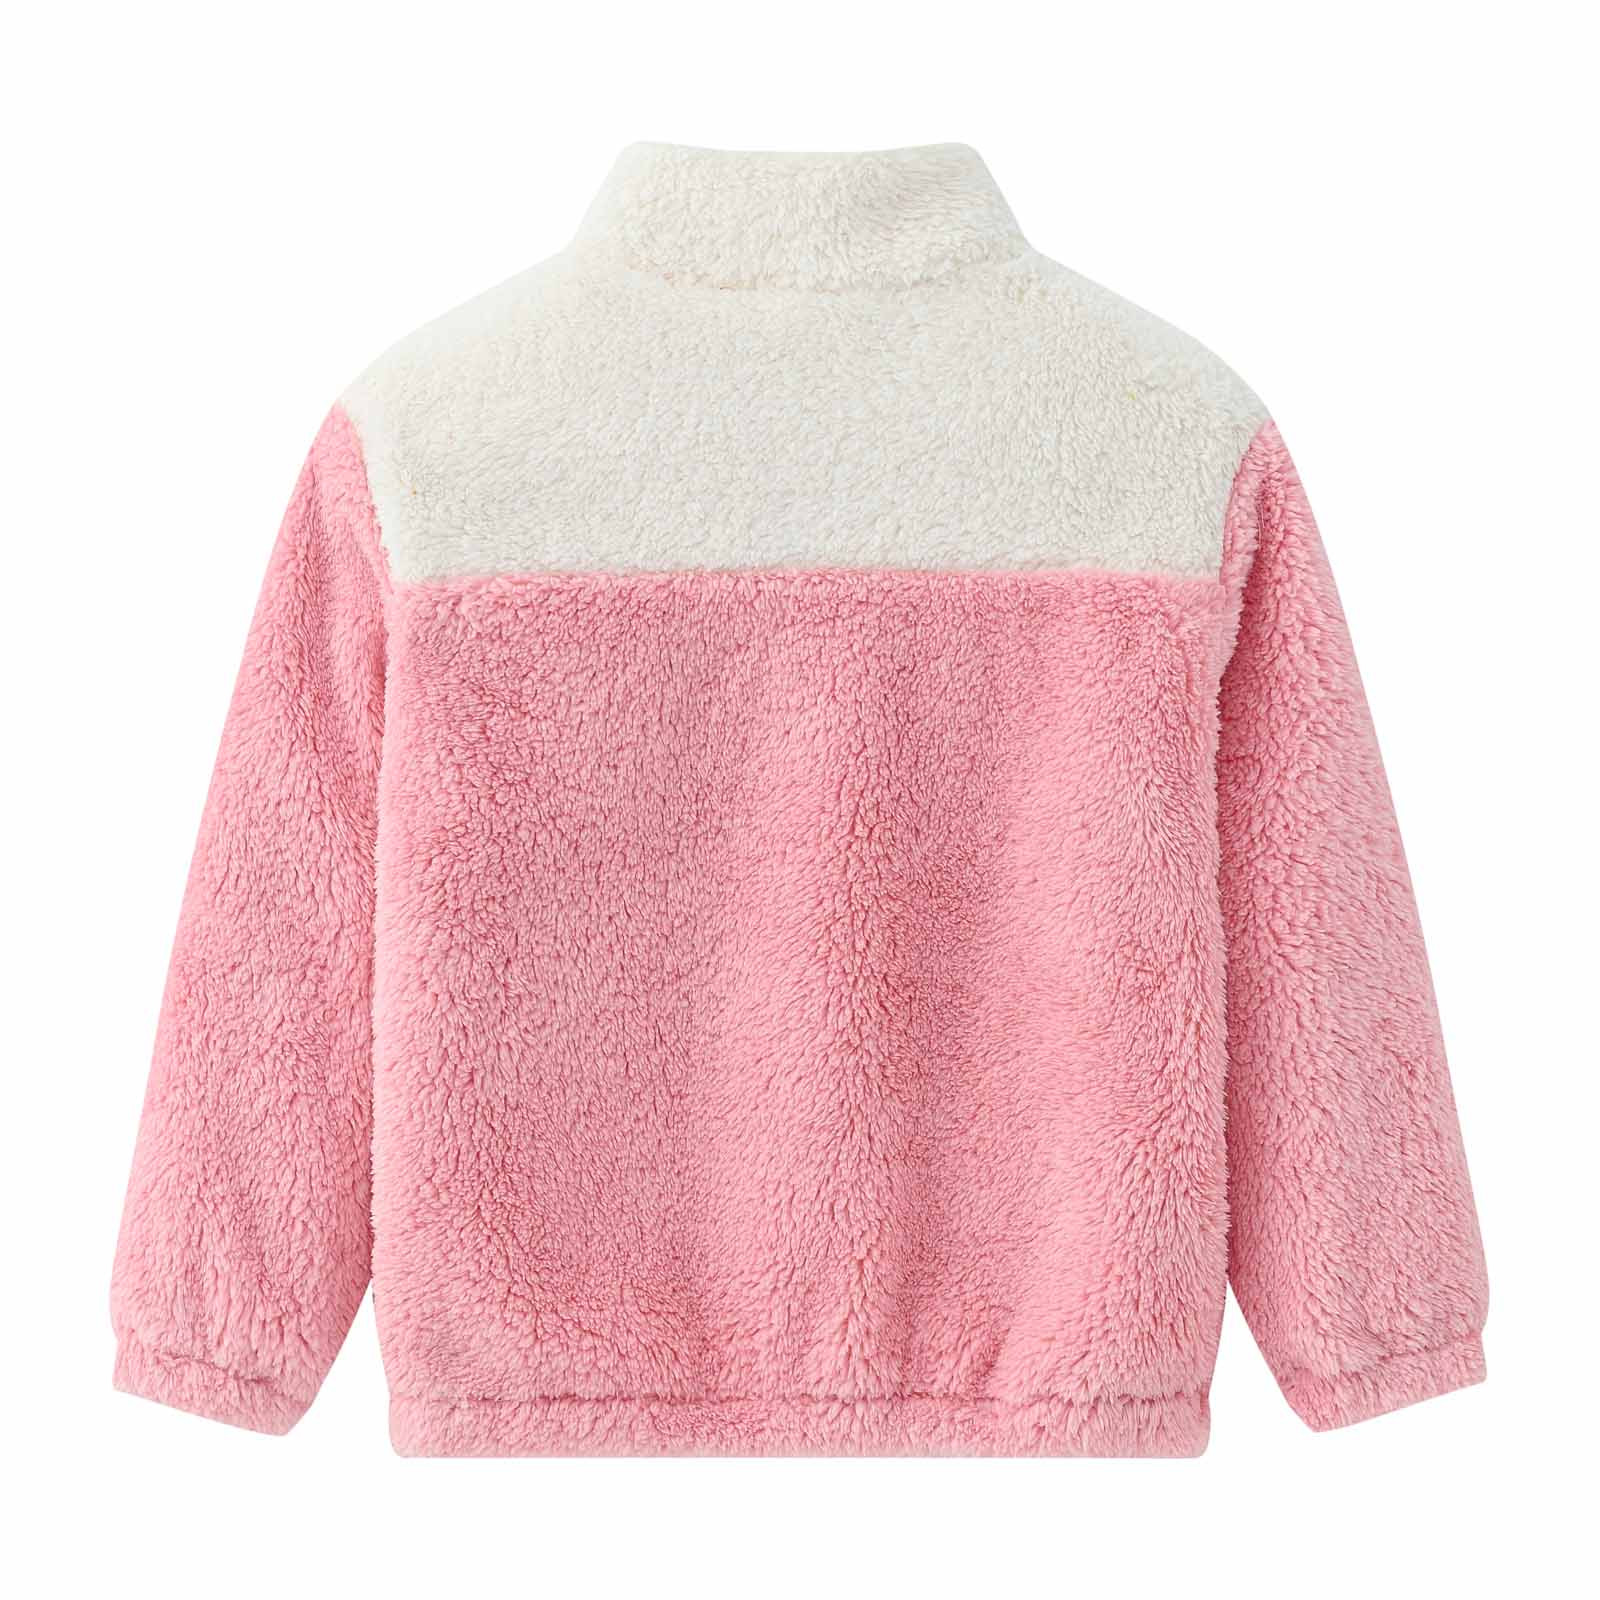 YYDGH Girls Zipper Jacket Fuzzy Sweatshirt Long Sleeve Casual Cozy Fleece Sherpa Outwear Coat Full-Zip Rainbow Jackets(Pink,3-4 Years) - image 5 of 8